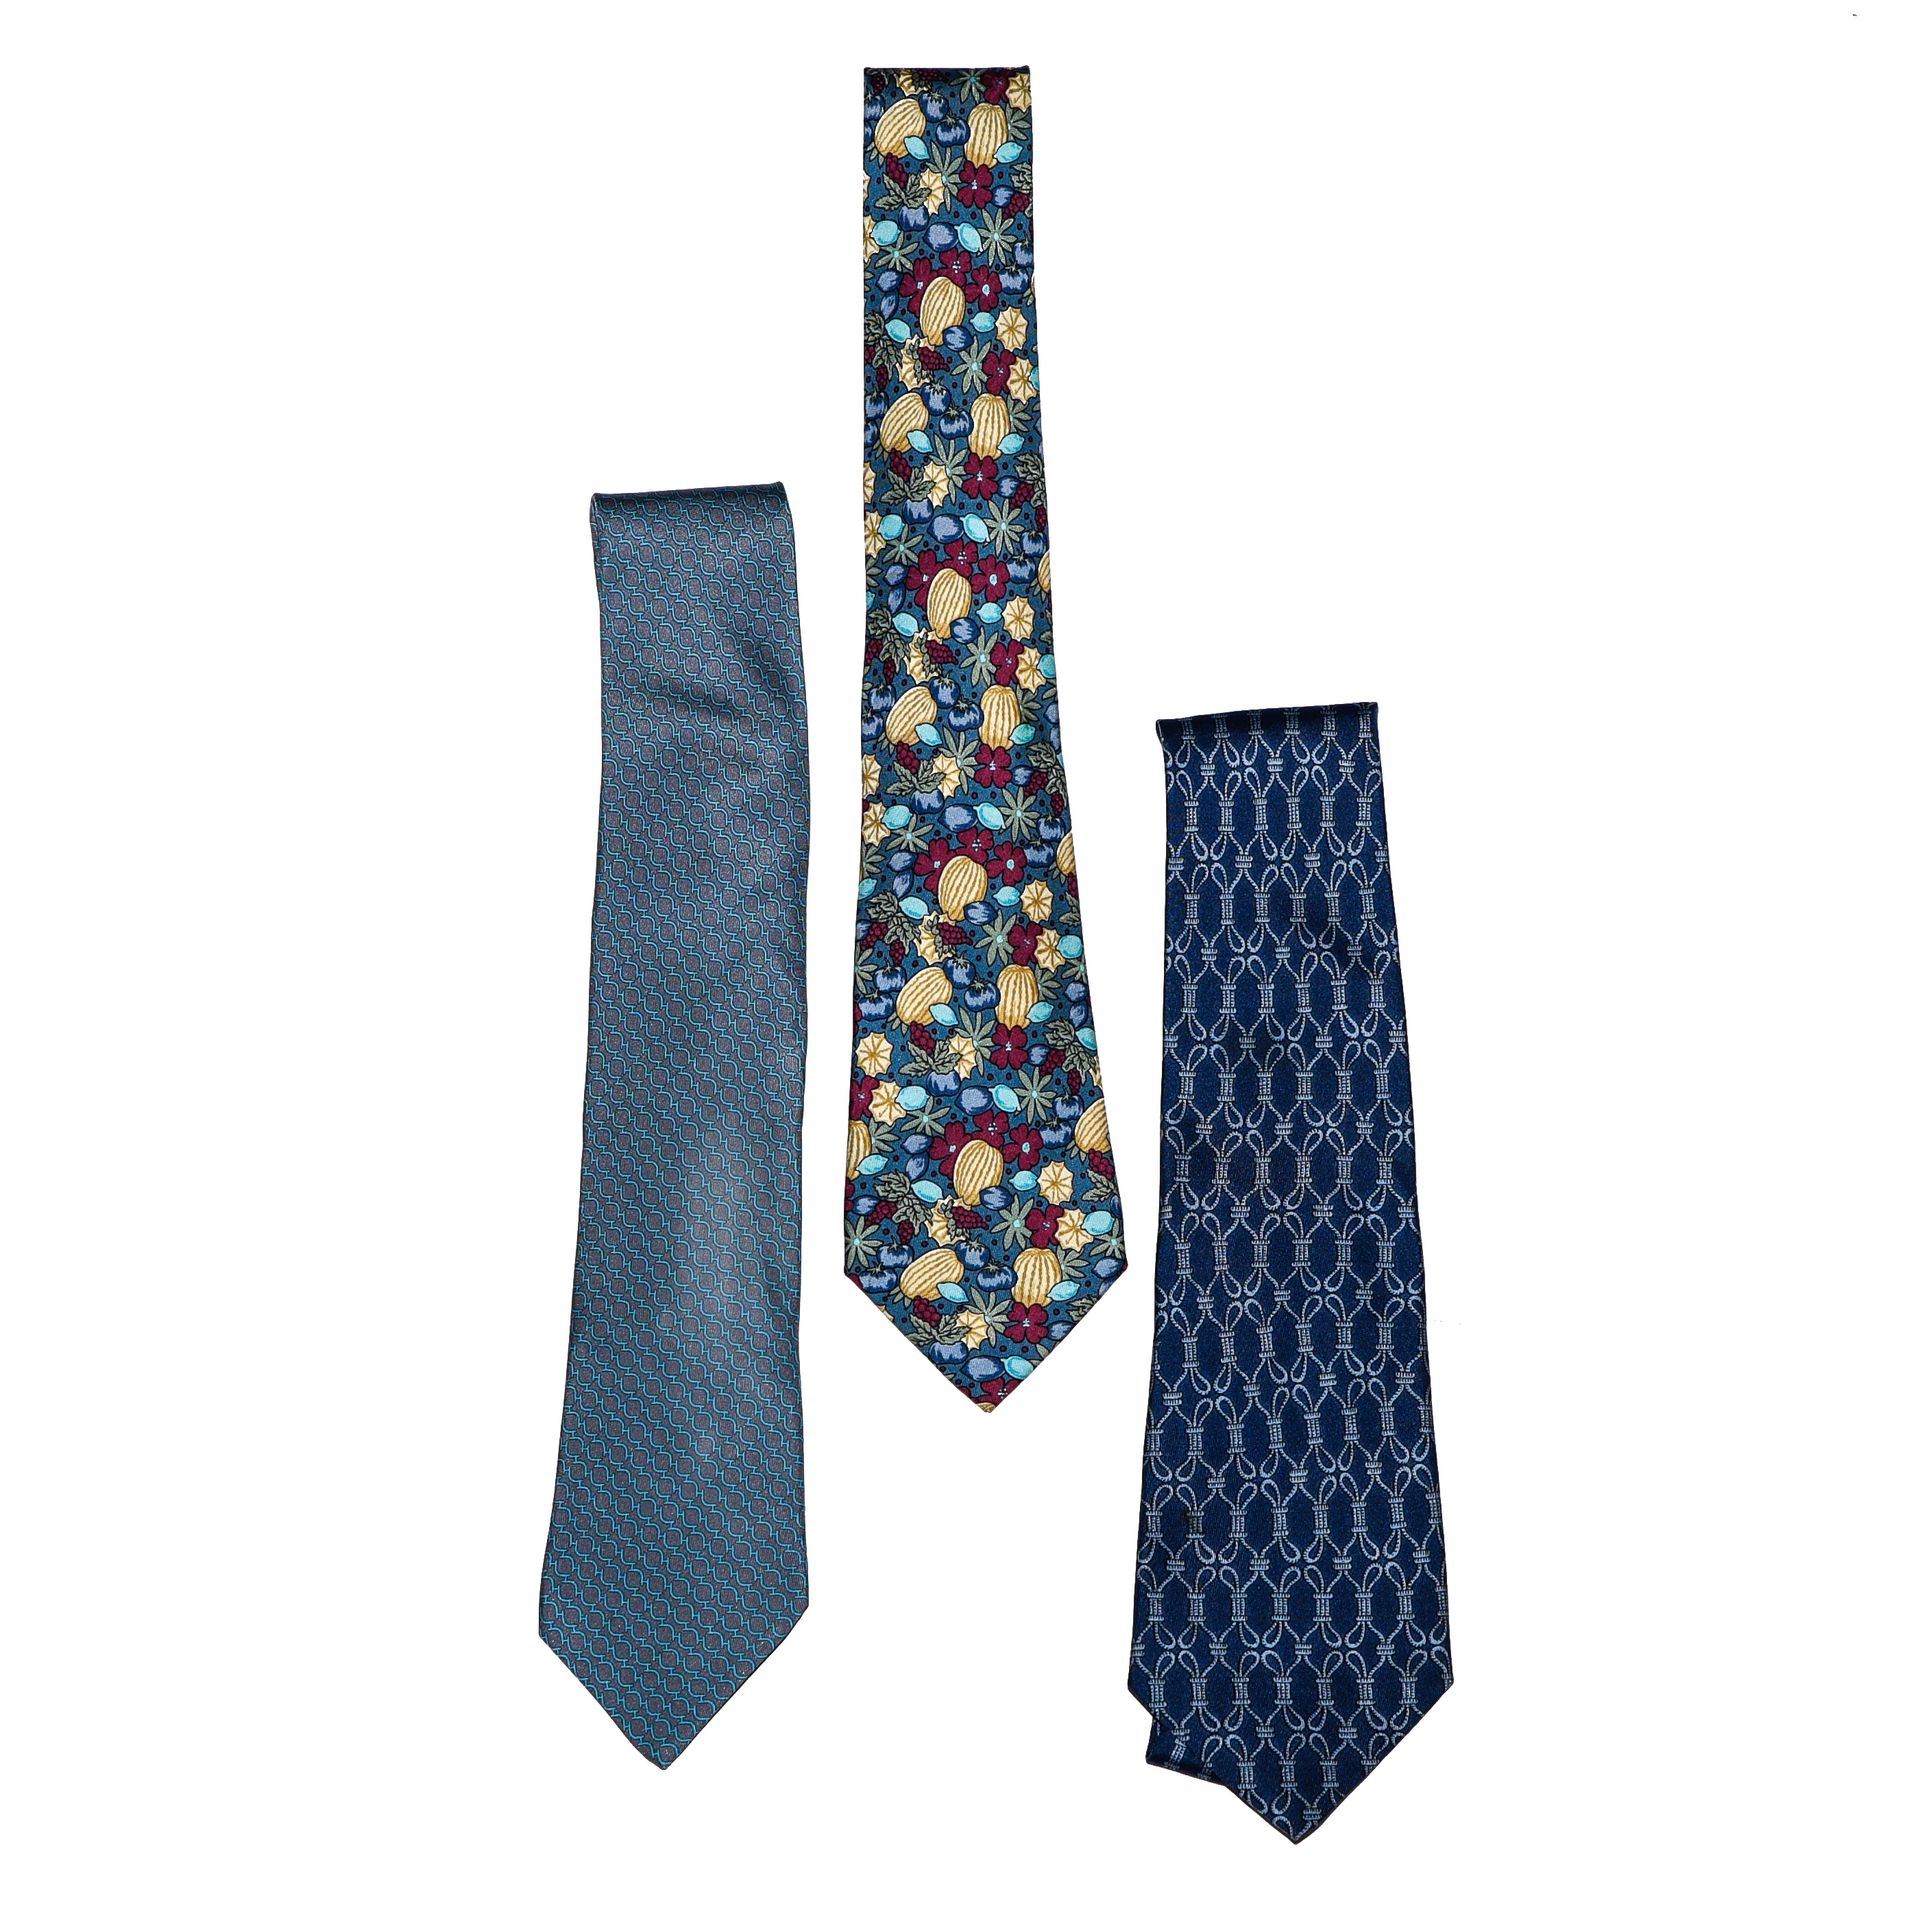 Hermès Lot de 3 cravates twill



De tons bleus. 1- Fond bleu gris, dessins de m&hellip;